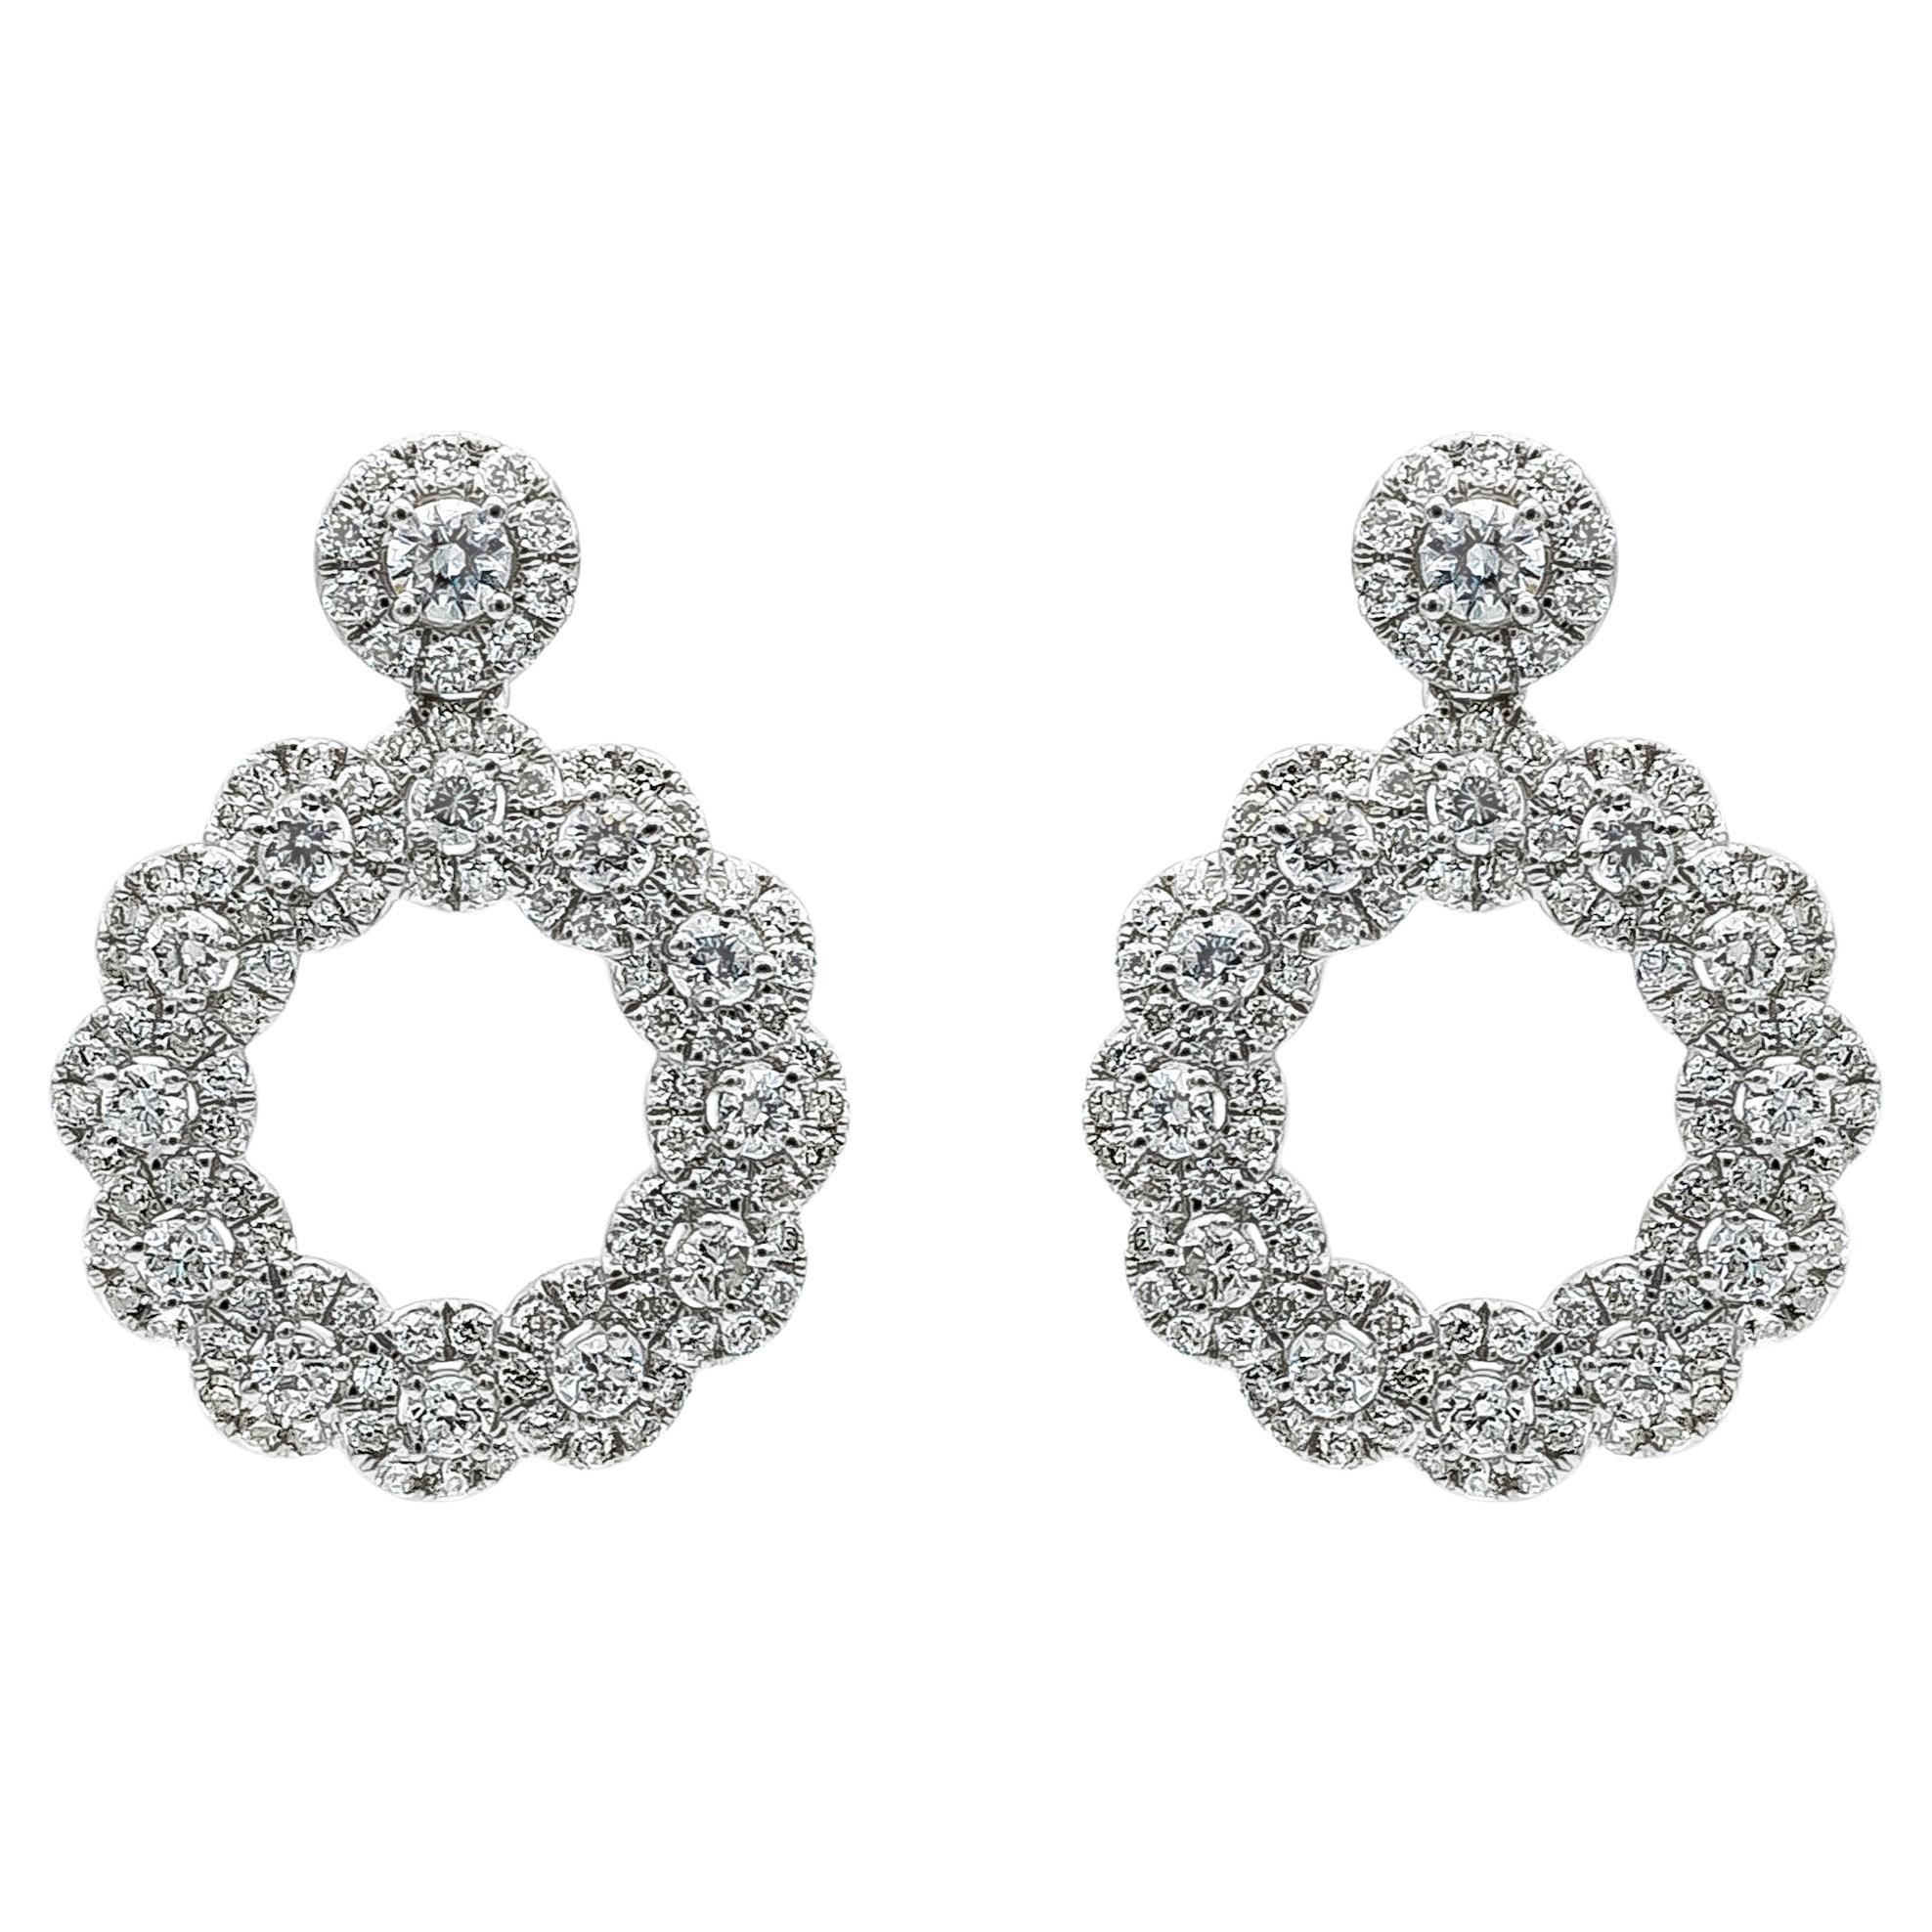 Roman Malakov 1.42 Carat Total Round Diamond Fashion Dangle Earrings For Sale